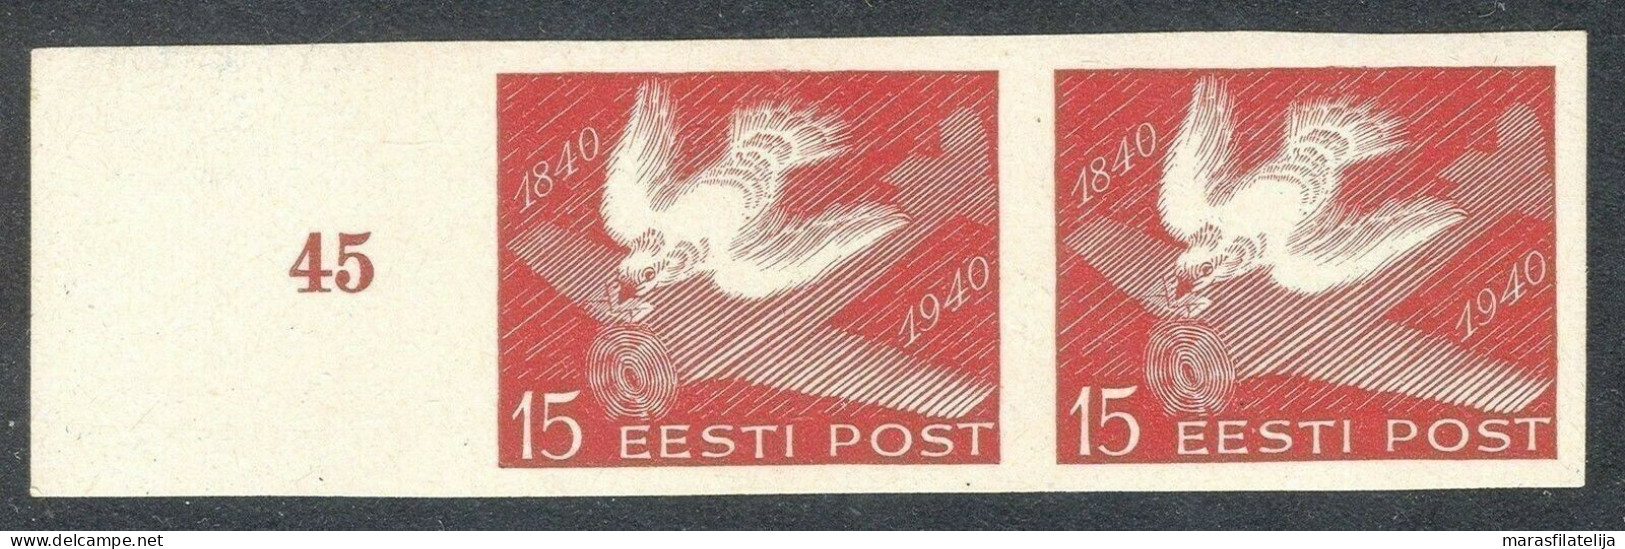 Estonia, 1940, Soviet (Russian) Occupation, Pigeon, 15 S, Imperforated Pair - Estland